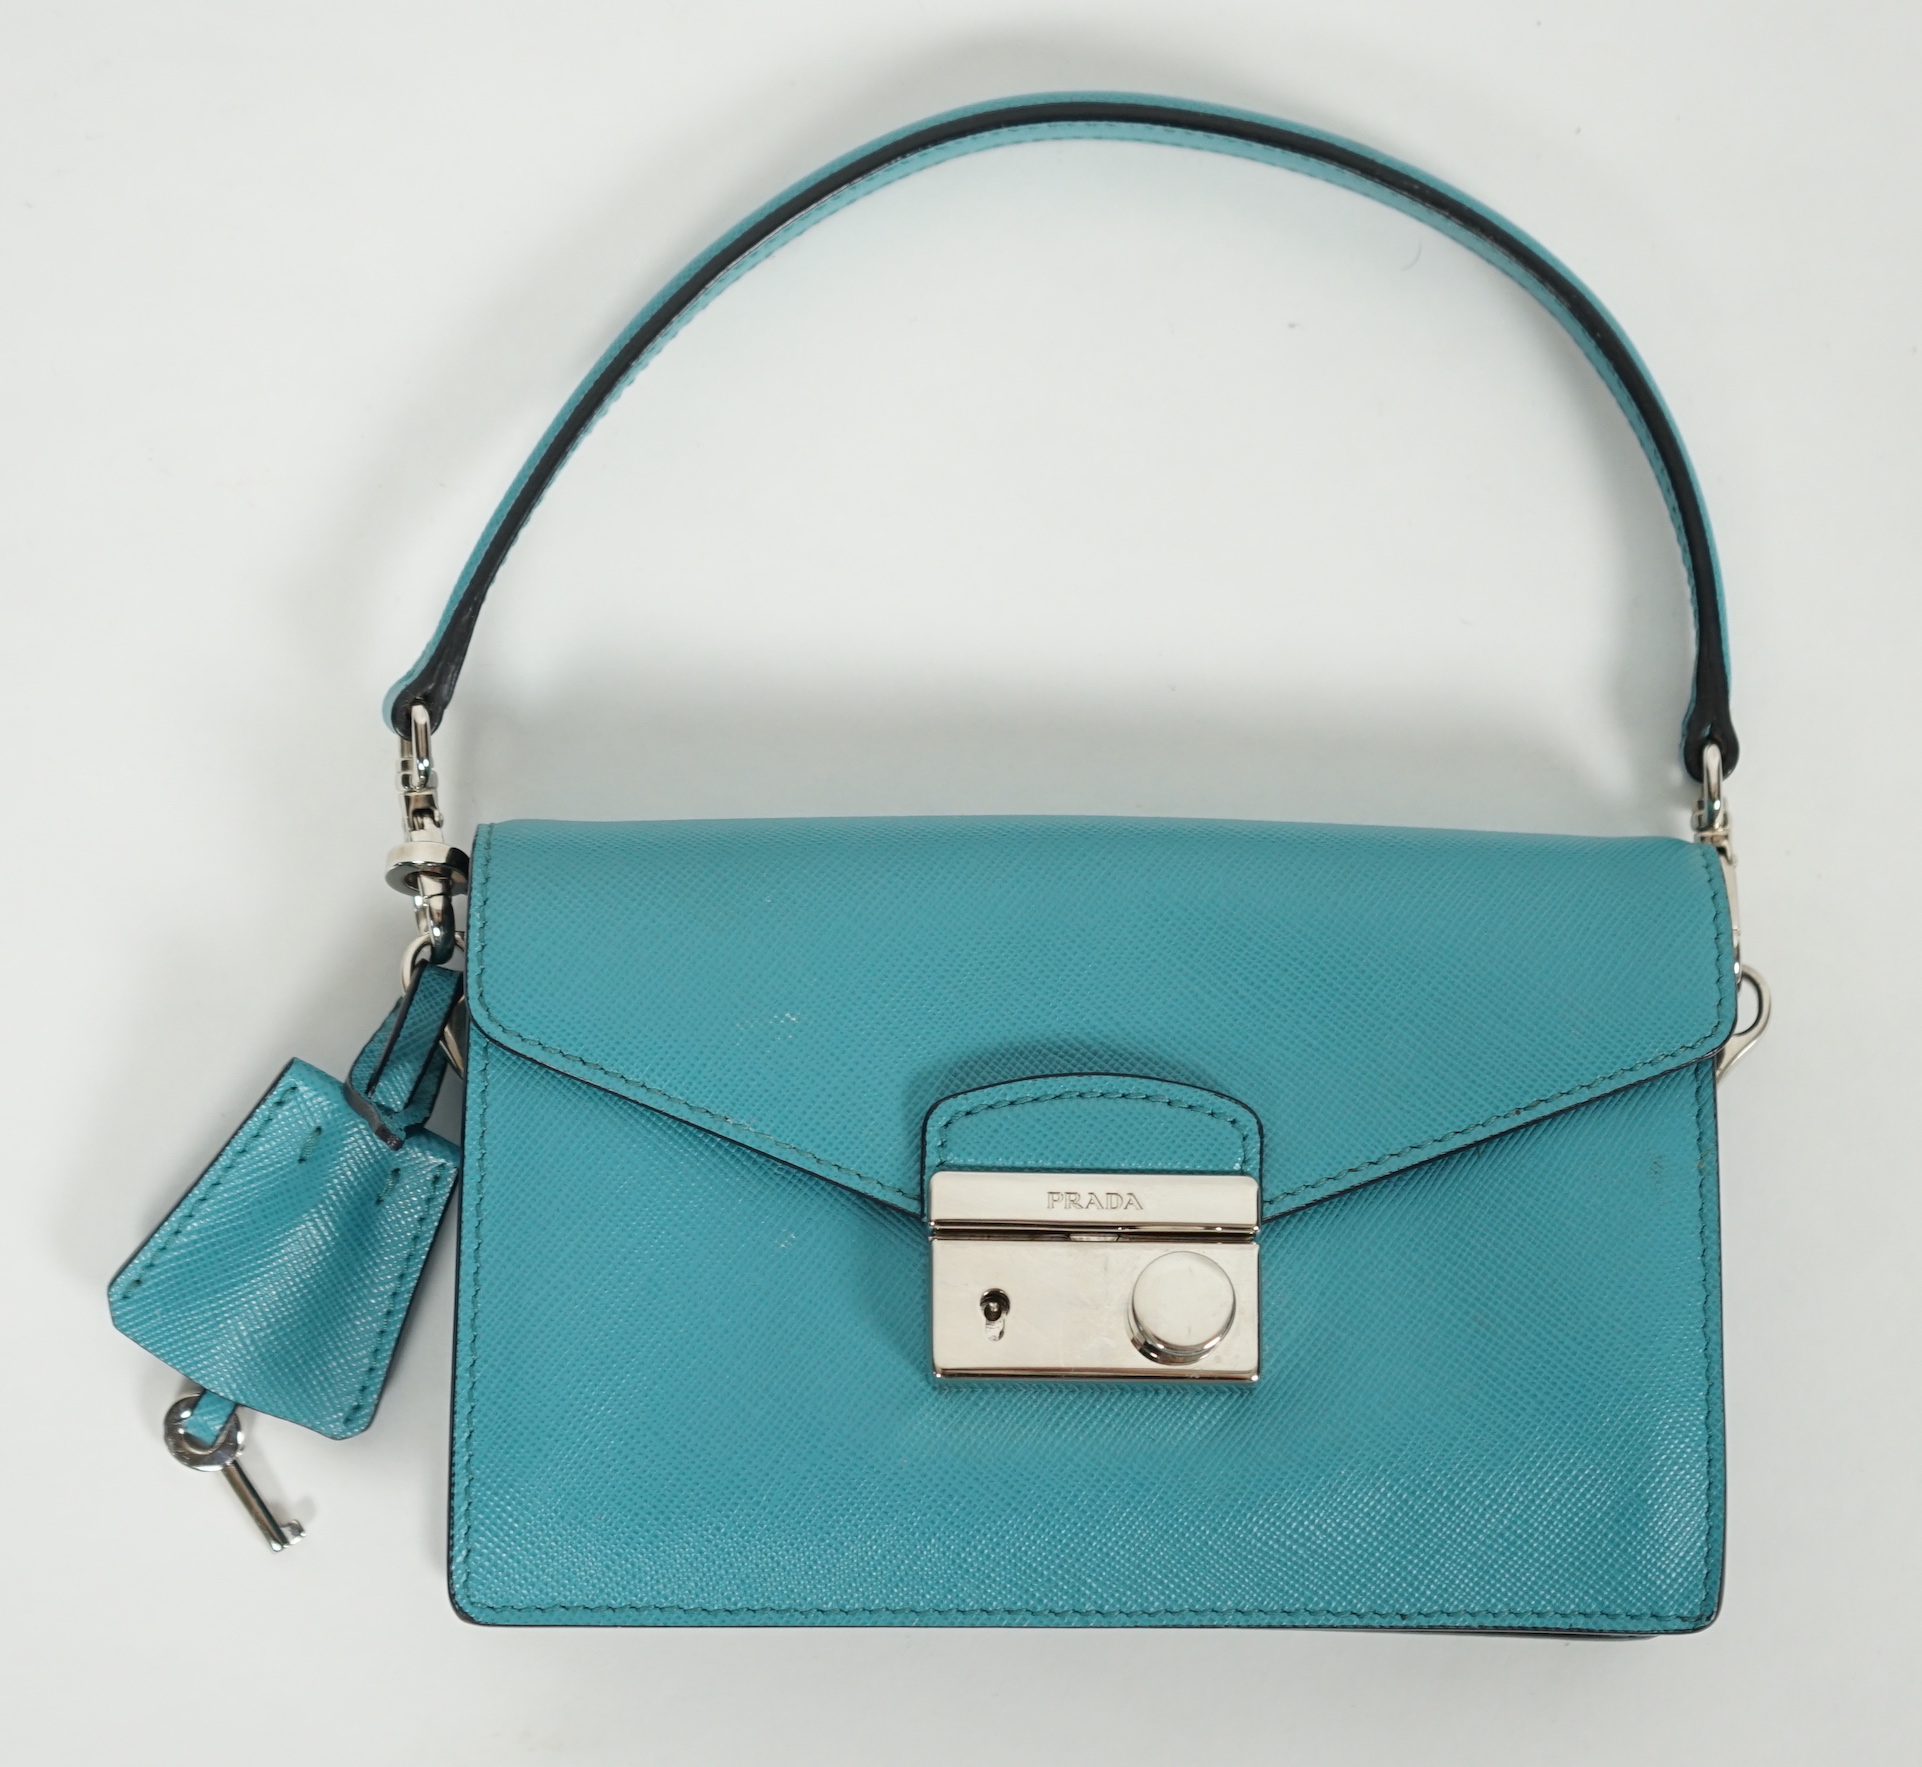 A Prada Saffiano Lux Mini Sound bag in Turchese, silver-tone hardware, with bag, box and - Image 2 of 8